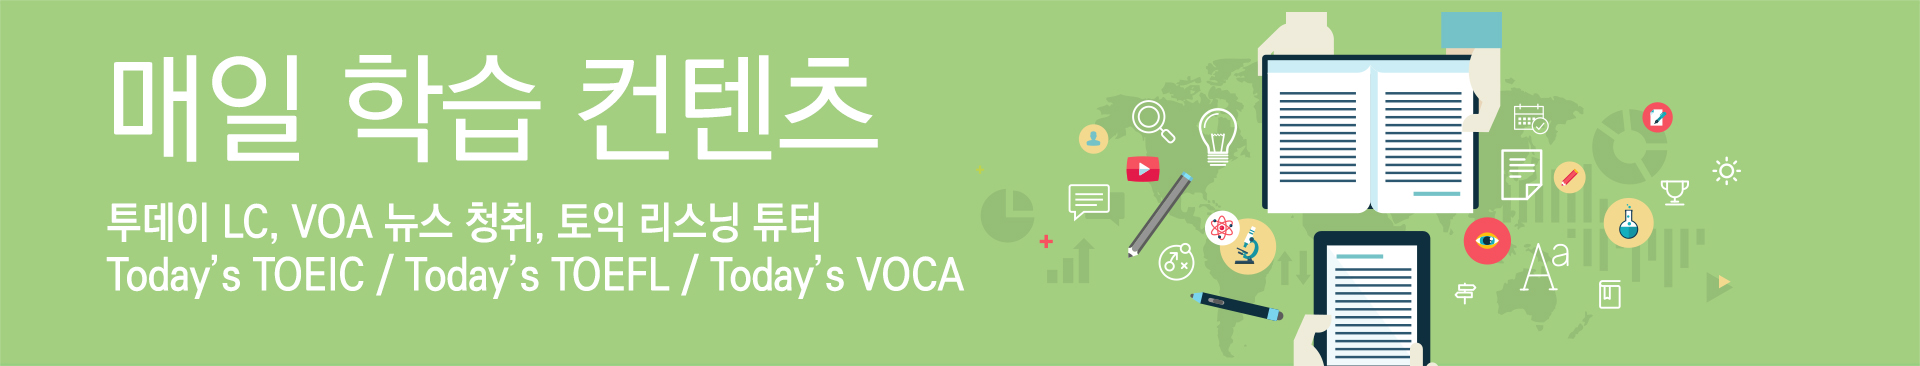 cbtKorea daily study banner